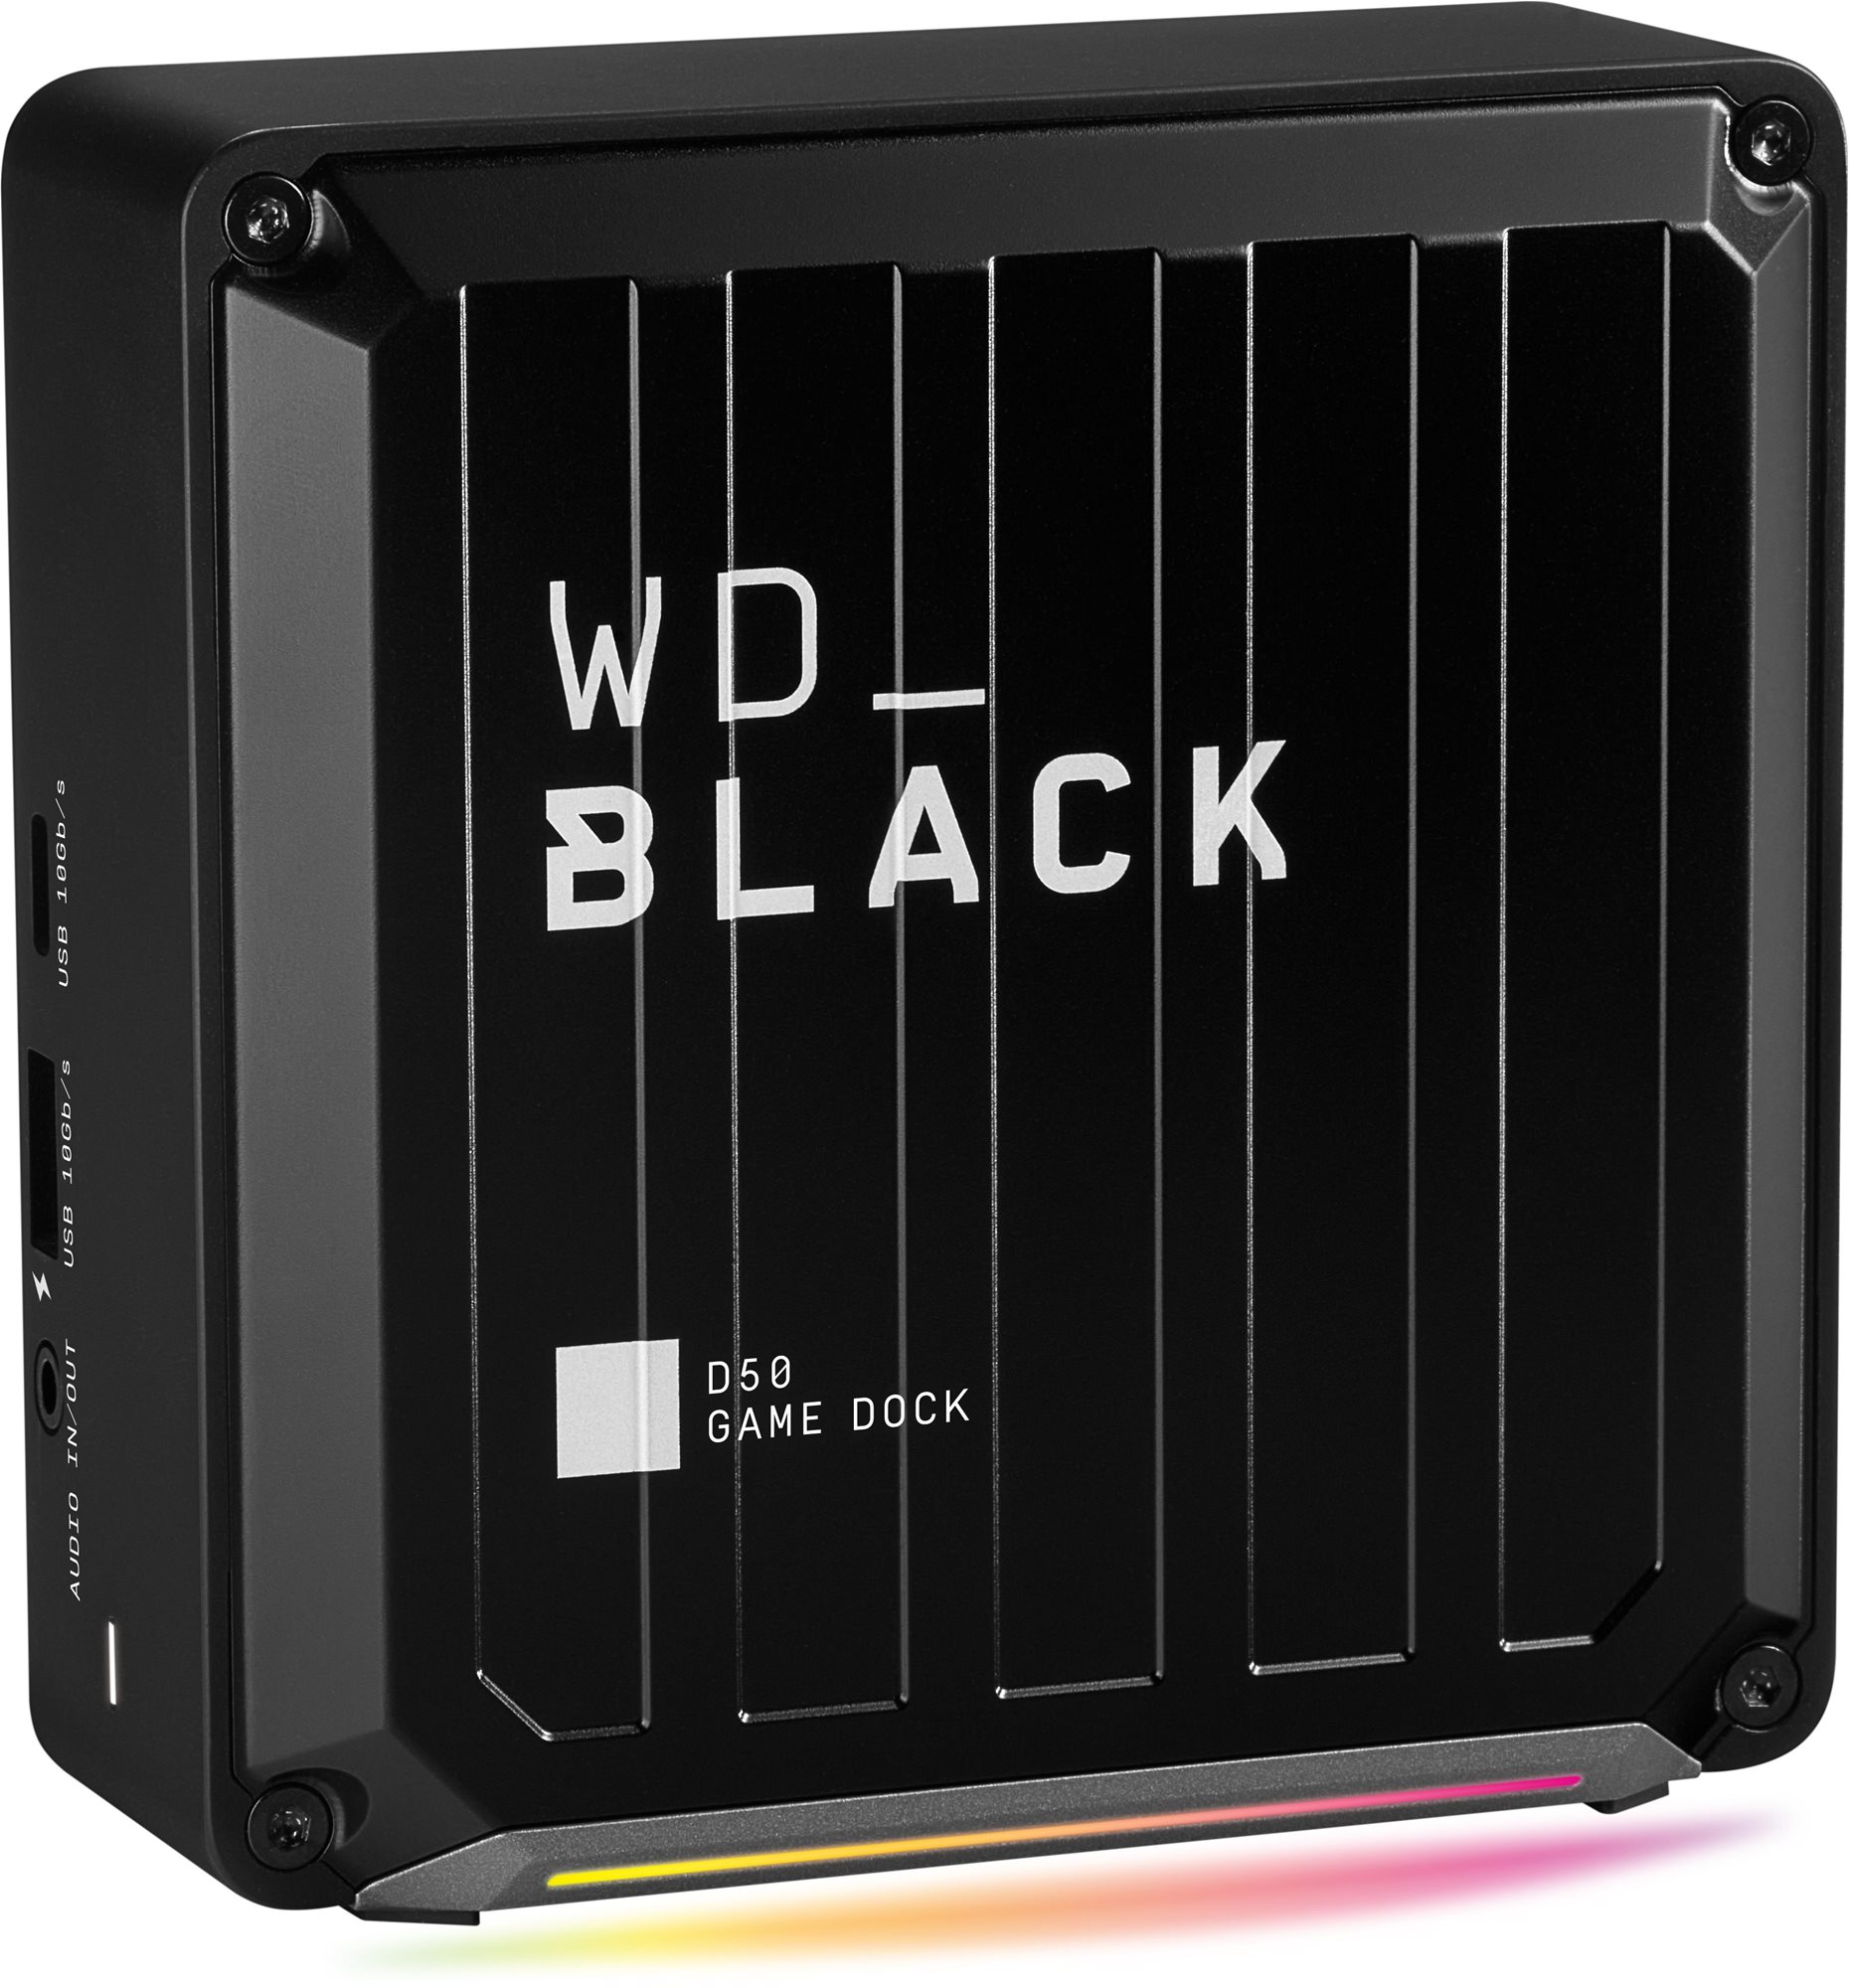 Western Digital WD Black D50 Game Dock 2TB